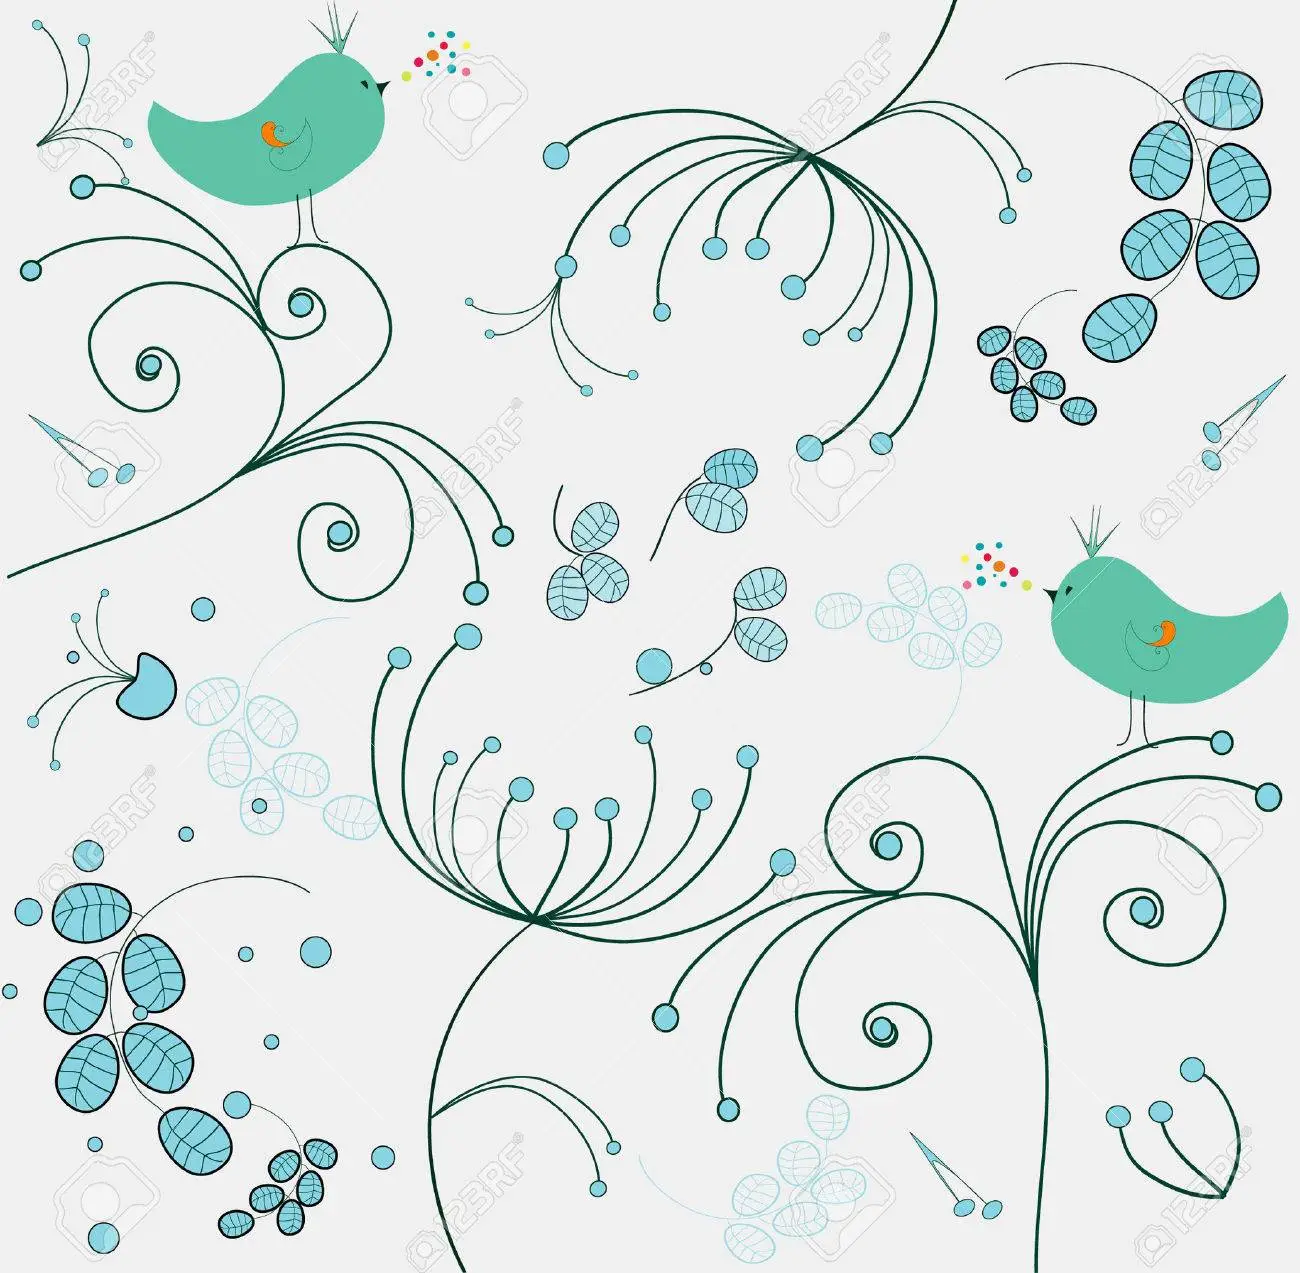 Whimsical floral wallpaper lizenzfrei nutzbare svg vektorgrafiken clip arts illustrationen image